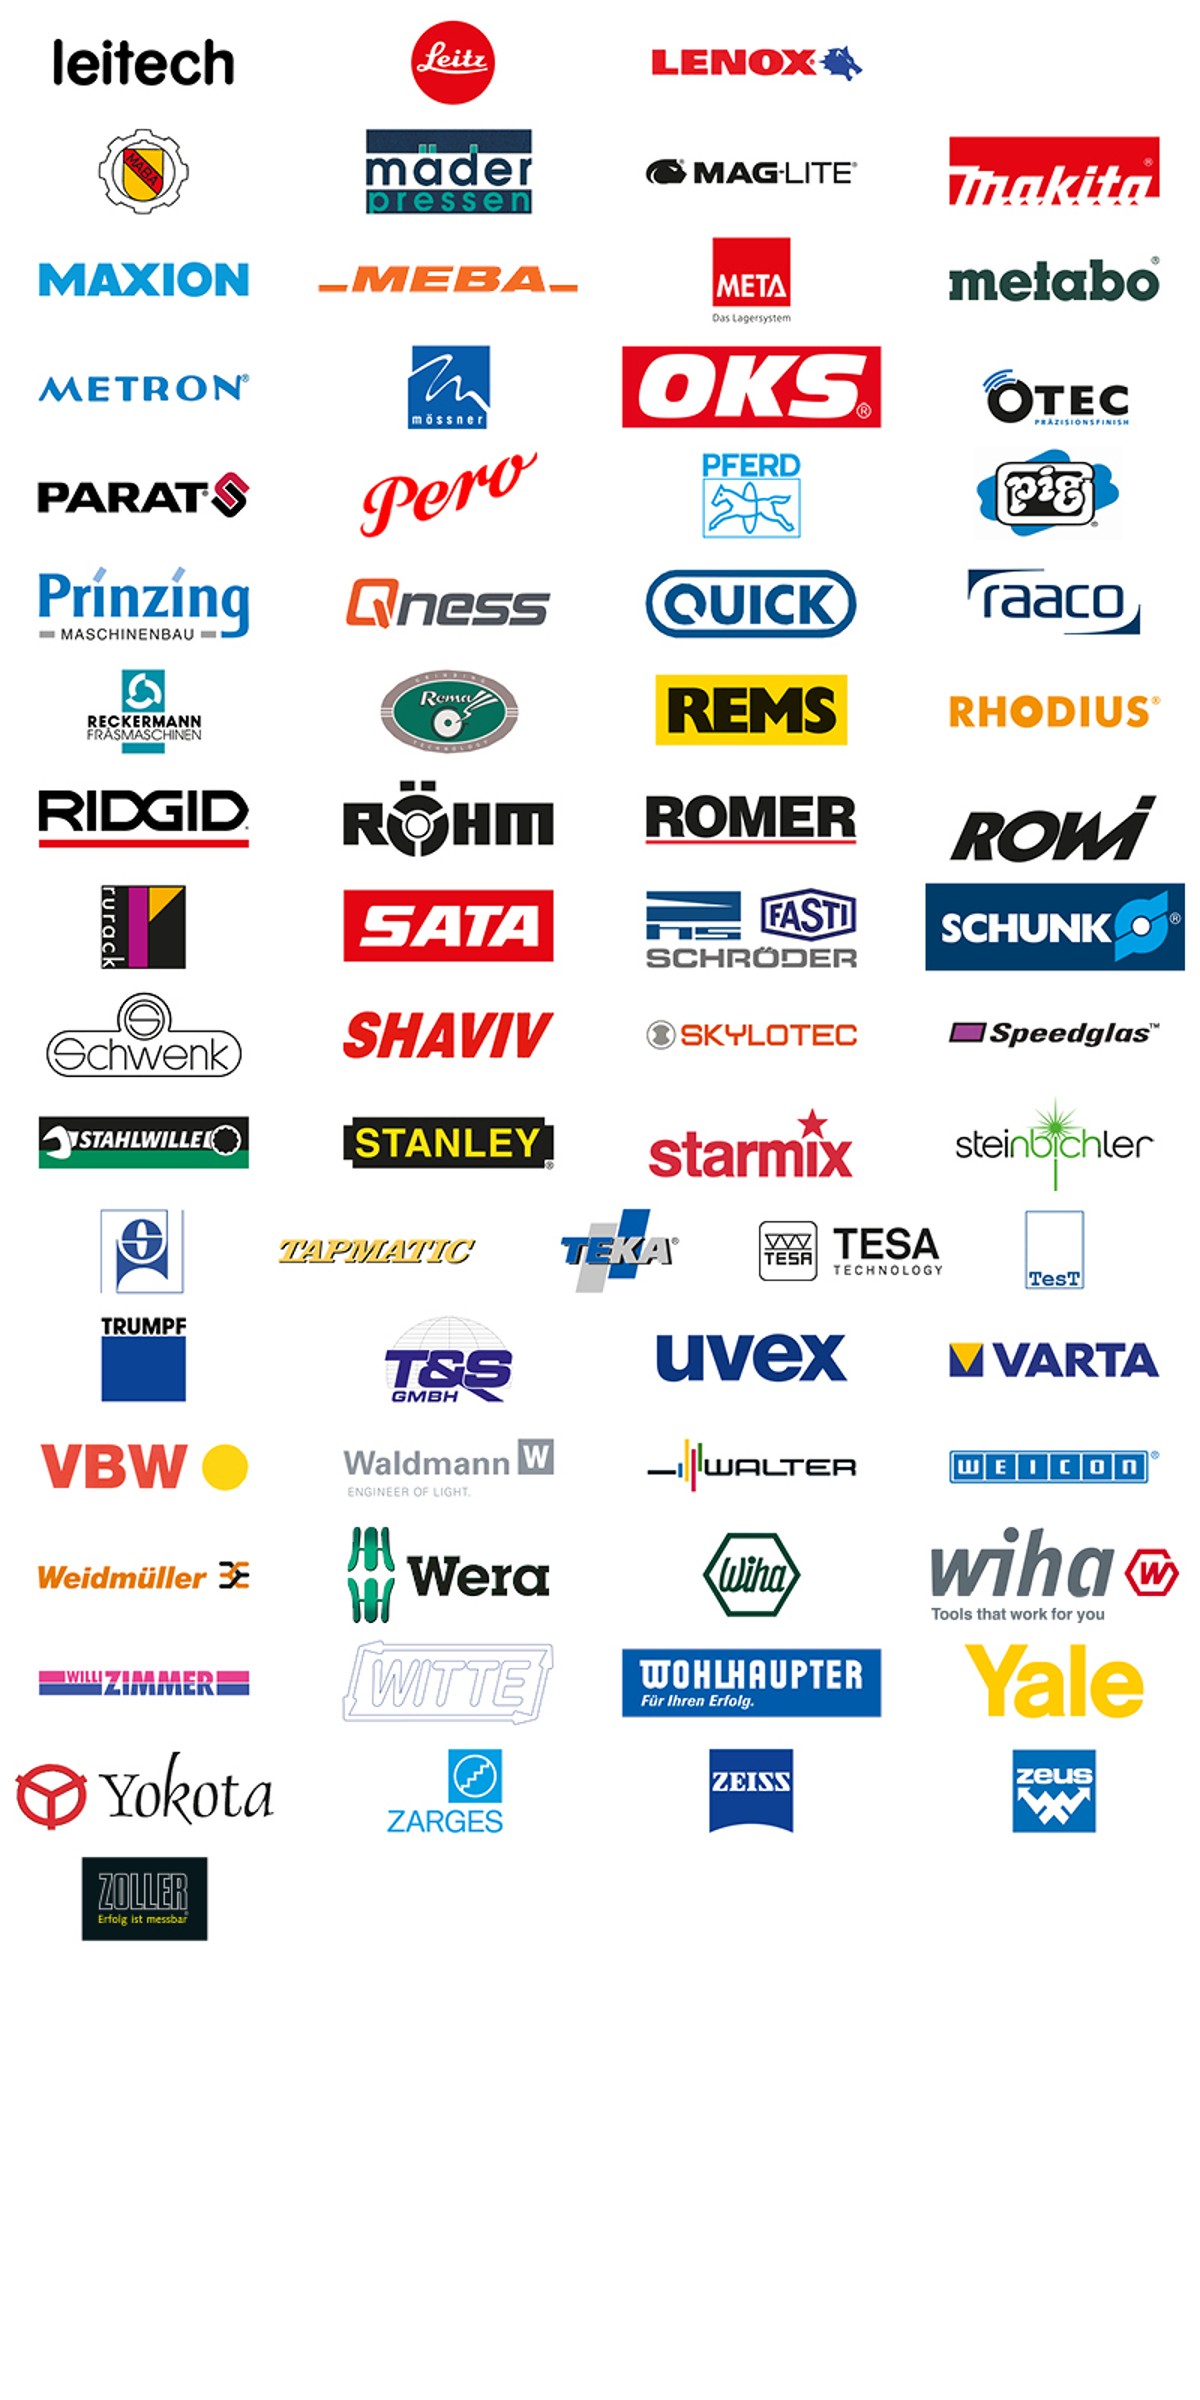 Our manufacturer brands